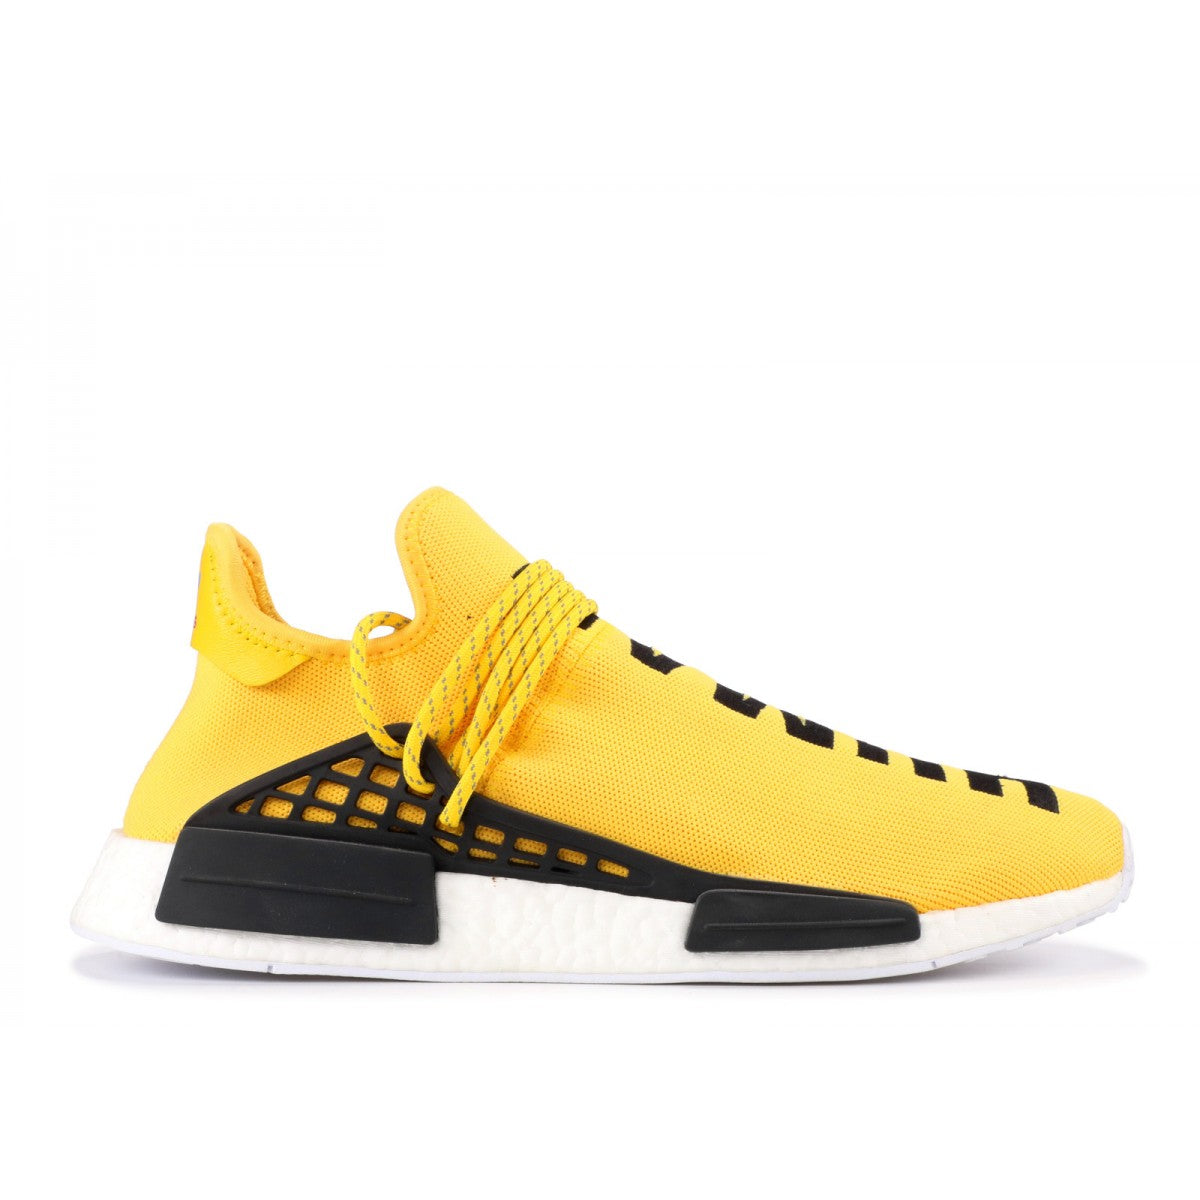 Adidas X Pharrell Williams Human Race NMD 'Yellow'